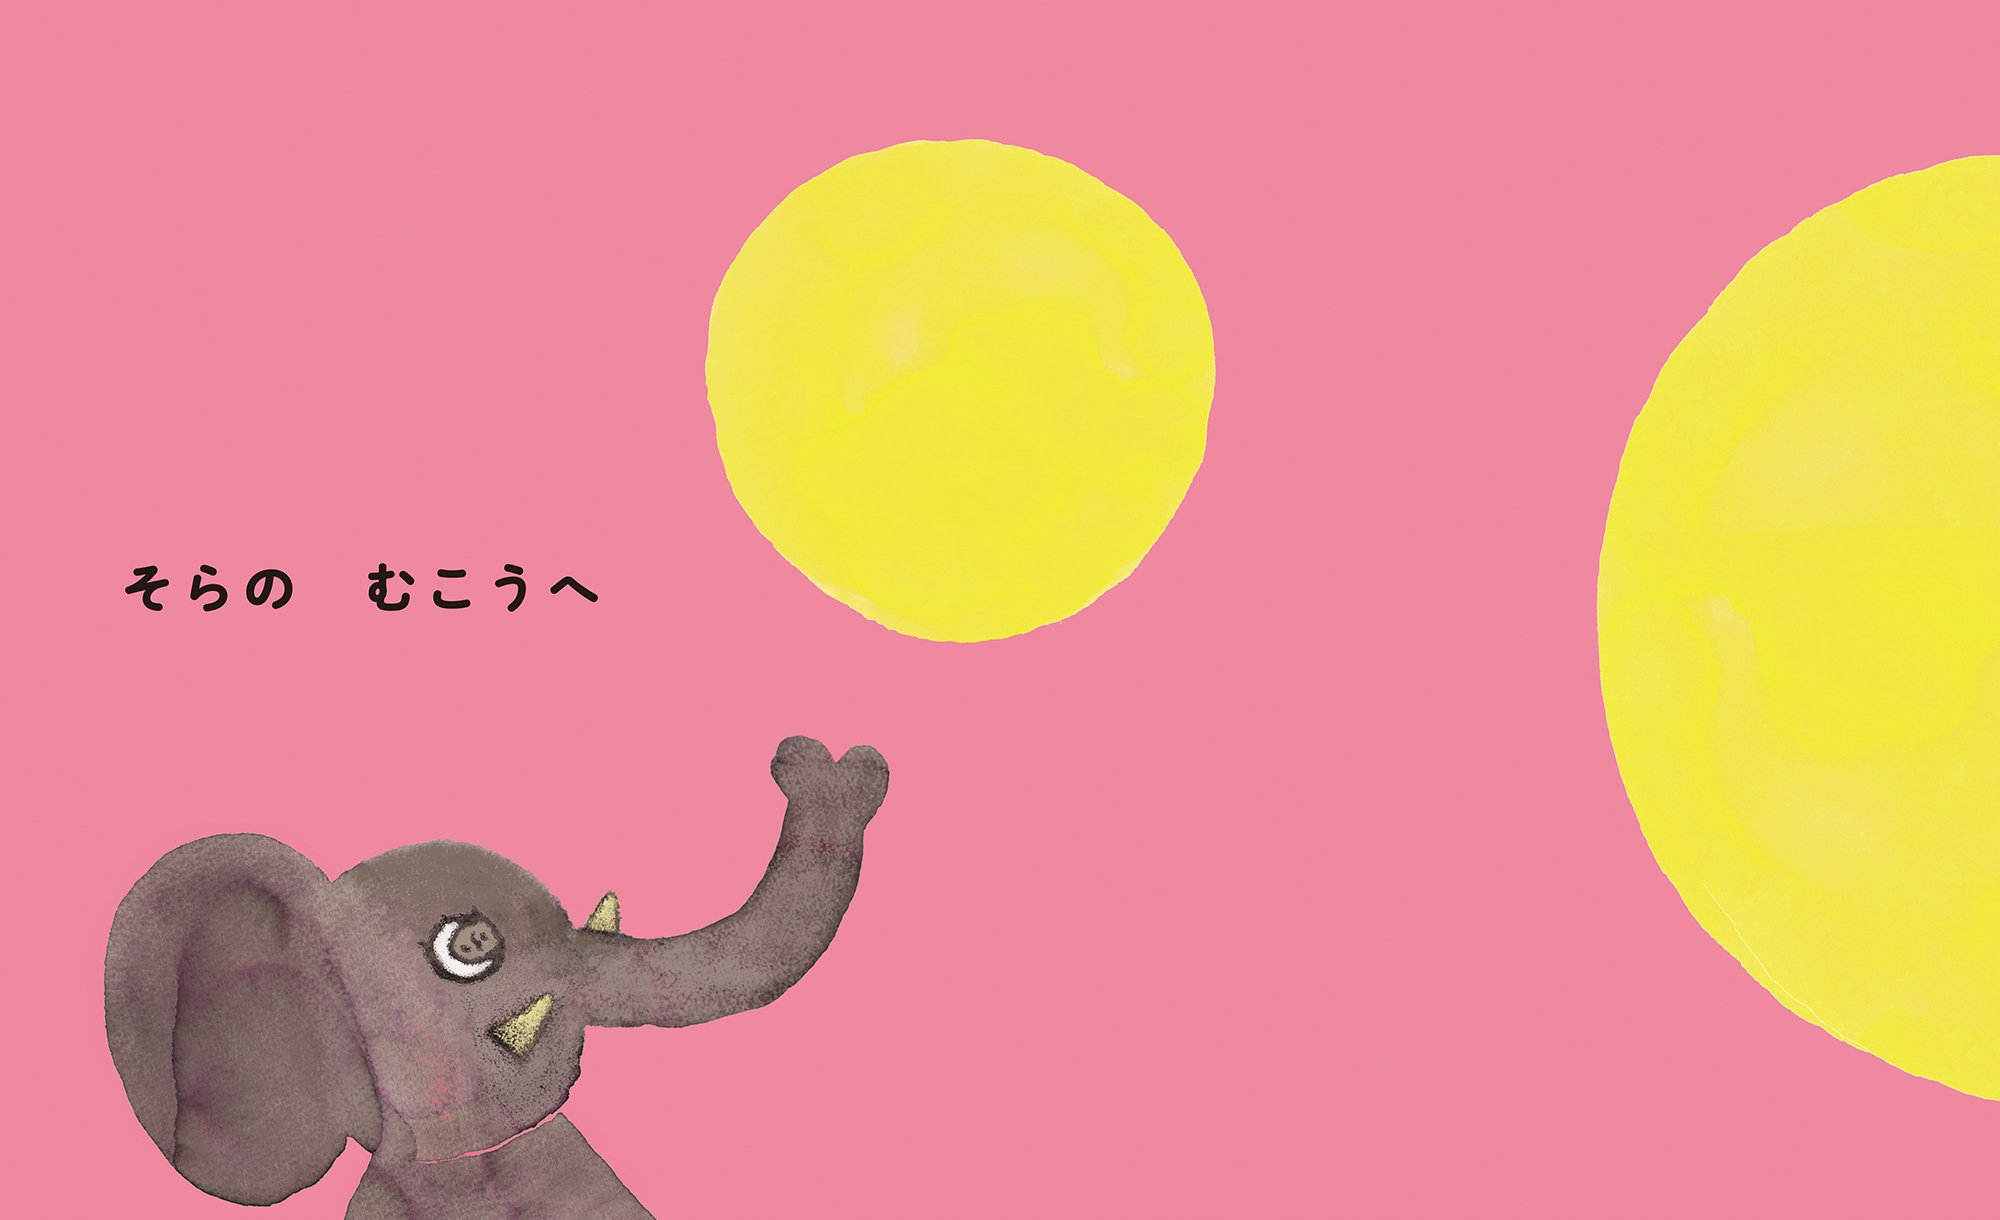 The Elephant_s Balloon, 18-19, Children Book, Kodansha Editon, April 2021.jpg